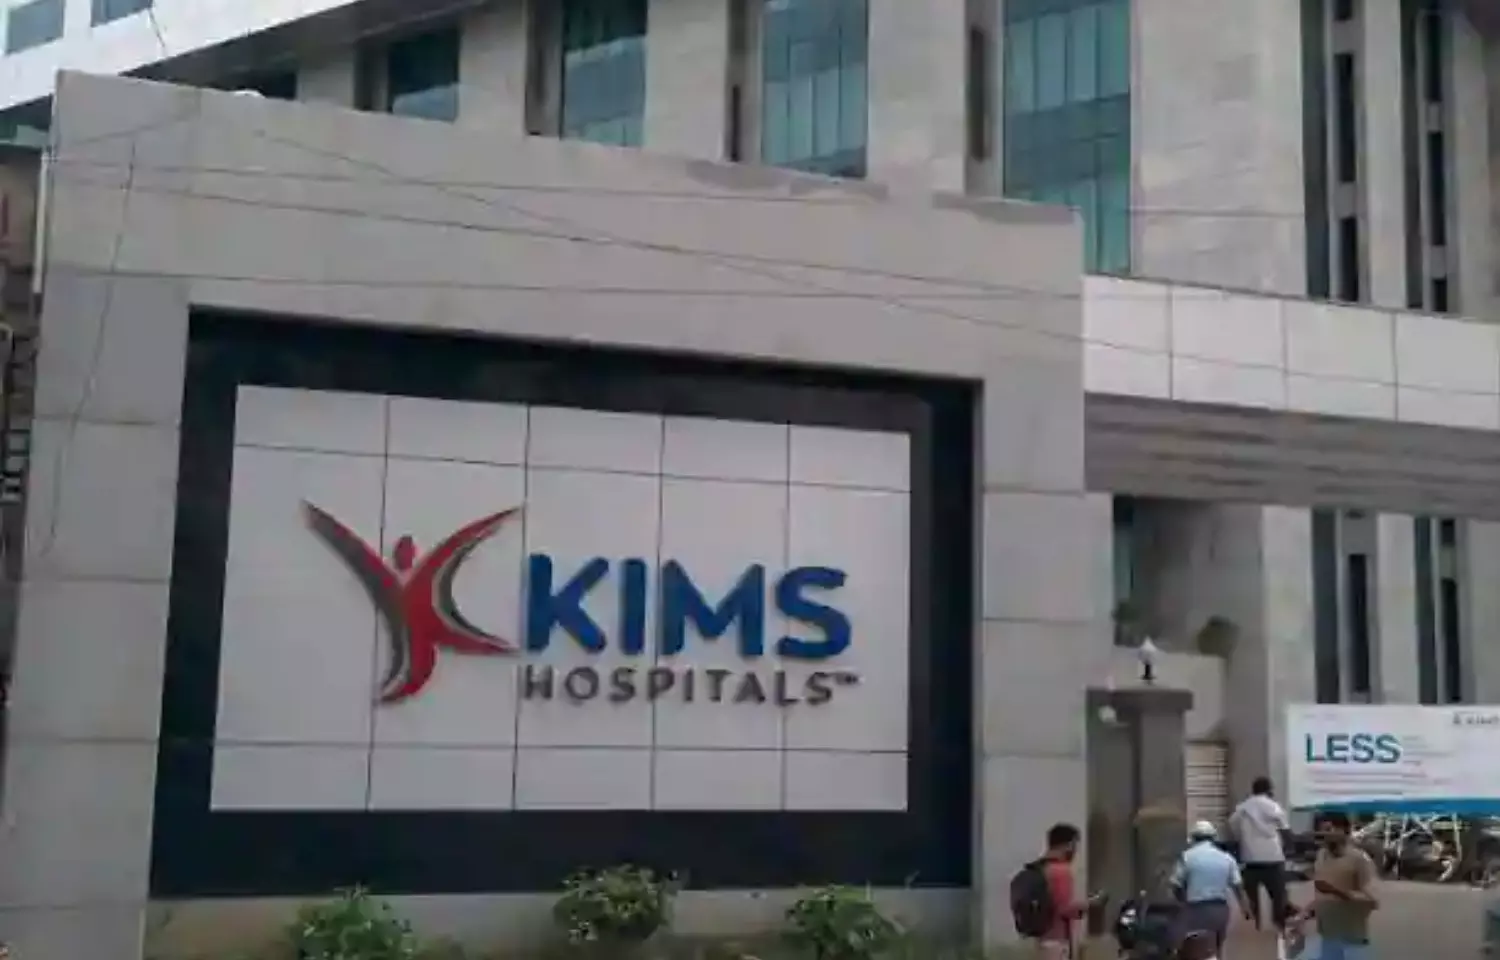 KIMS gets green light for kidney transplant